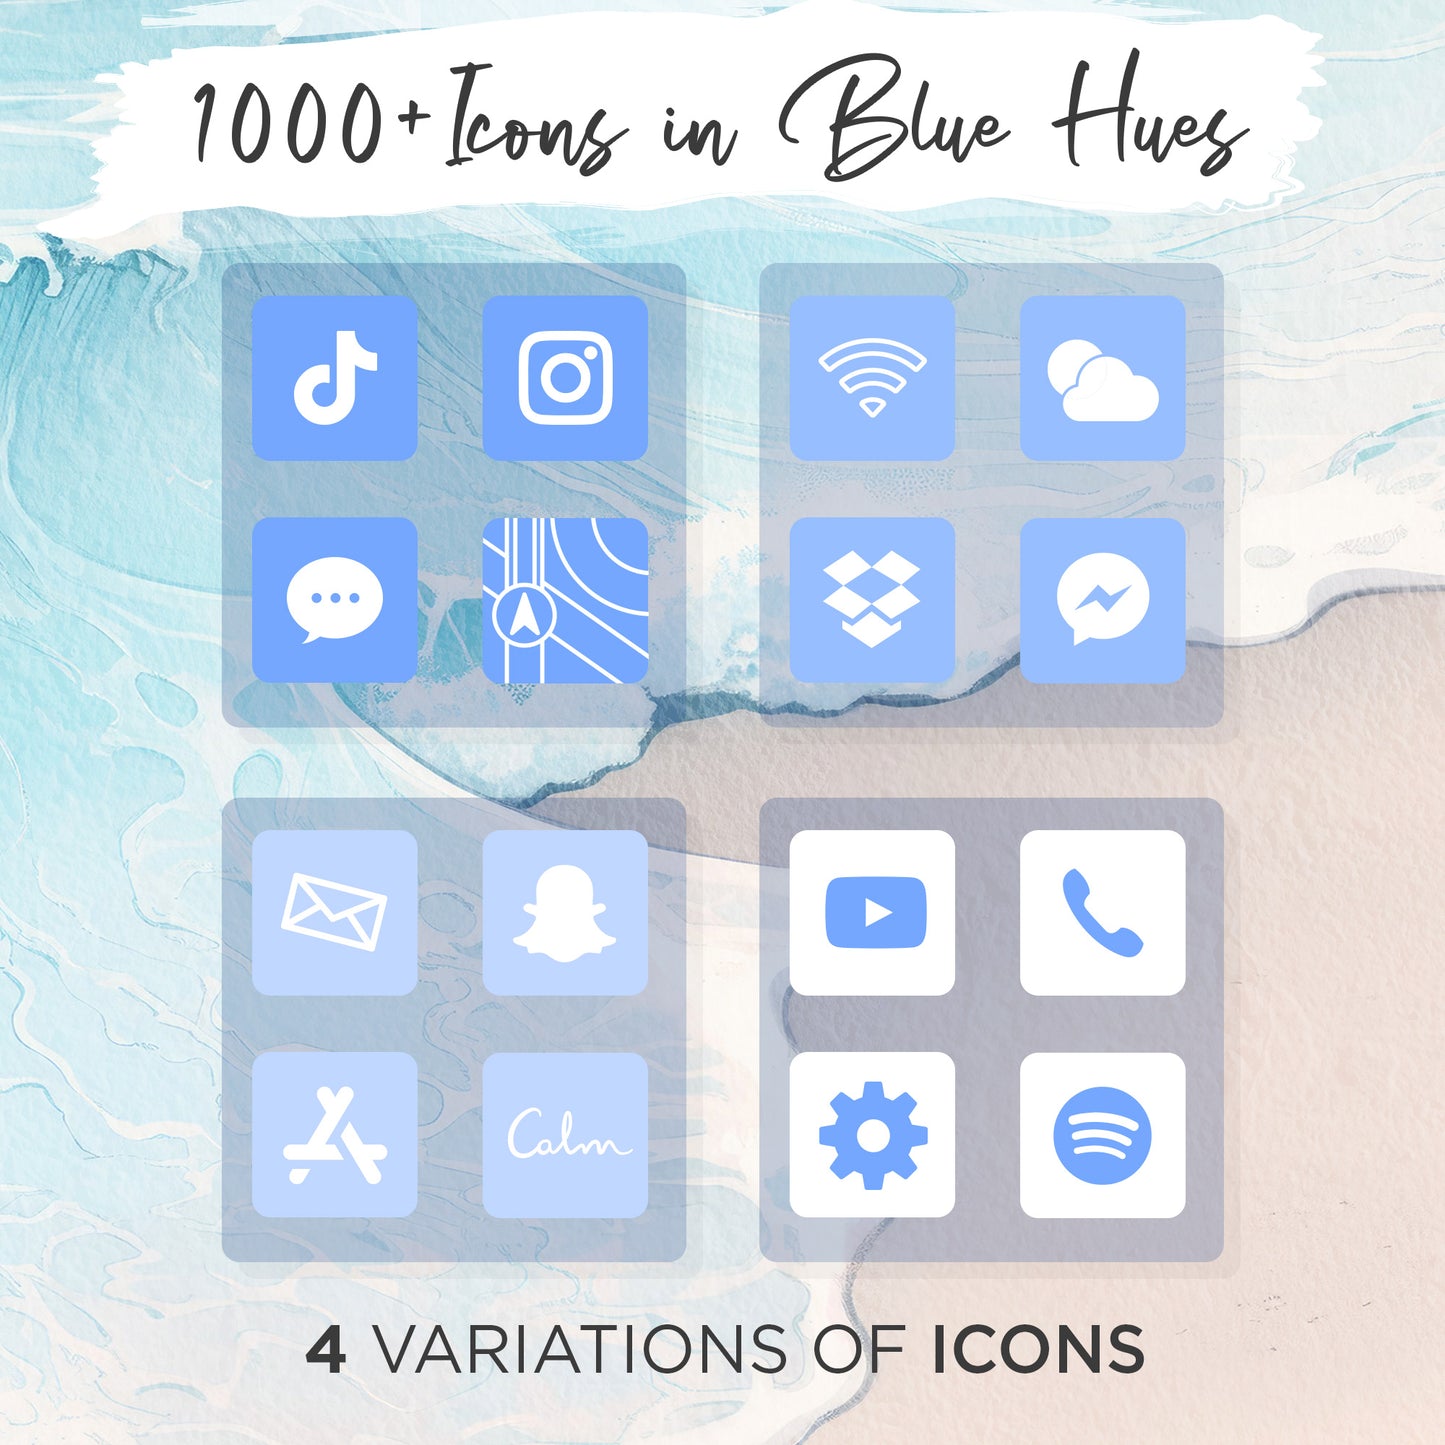 
                  
                    Blue Aesthetic iPhone Icon Set
                  
                